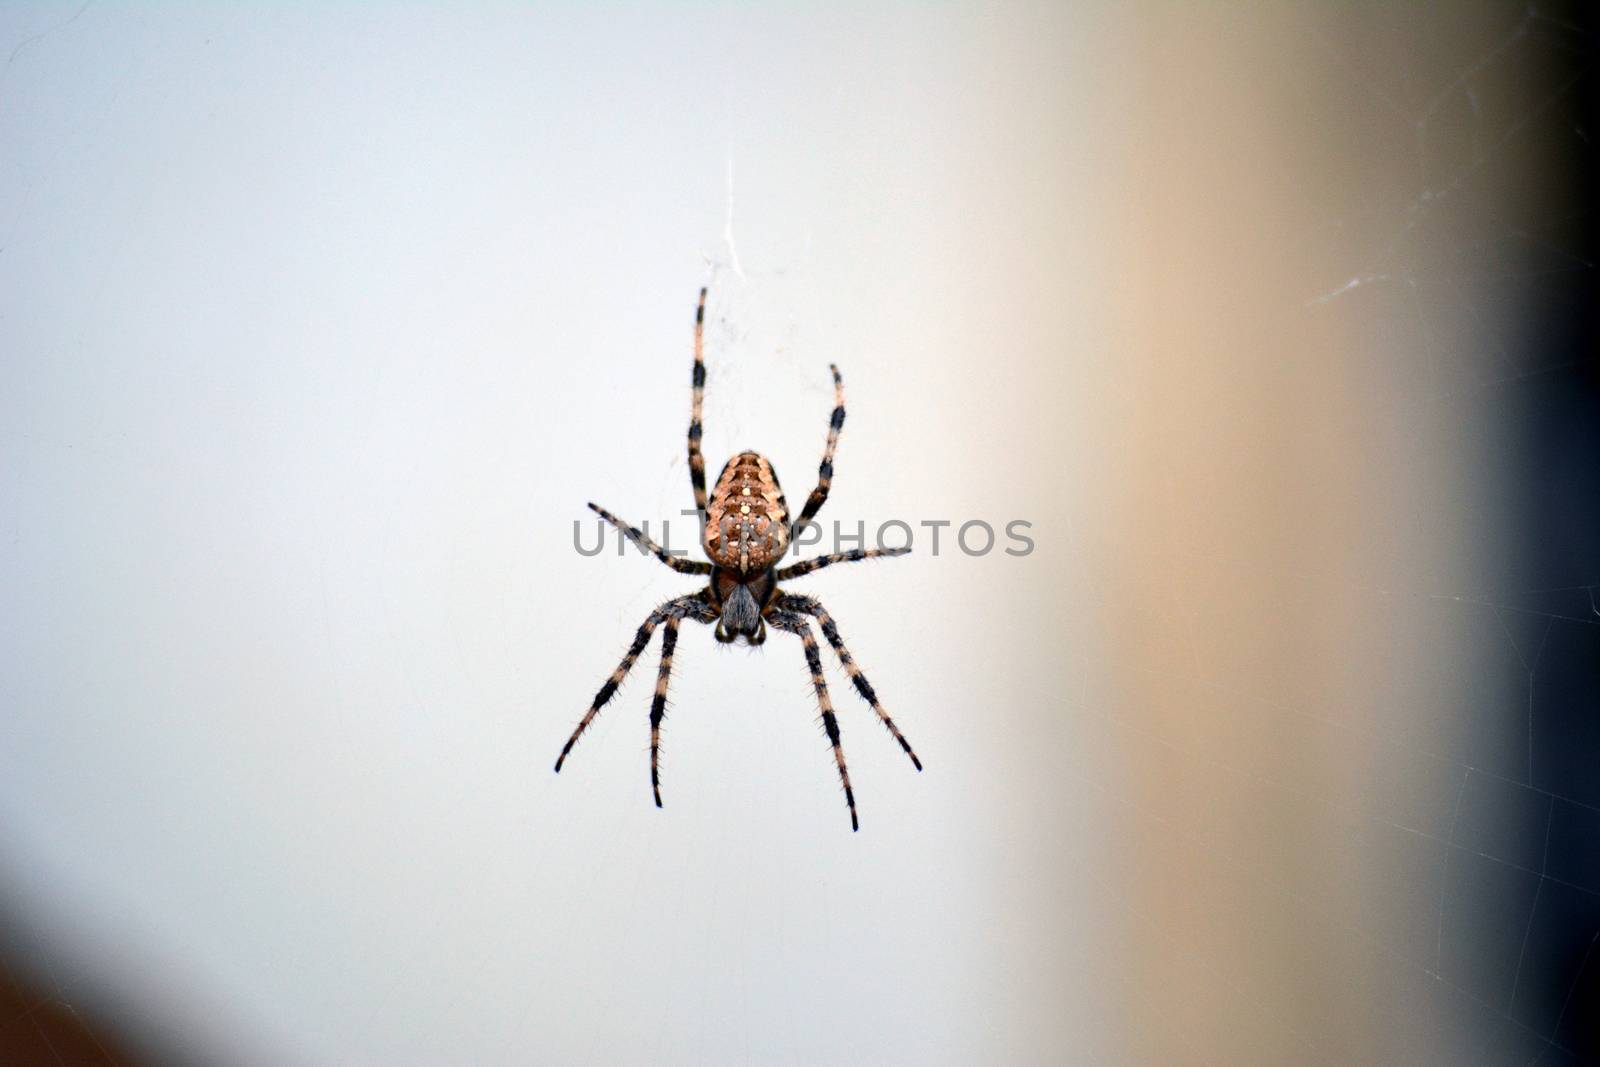 Giant European house spider on the web